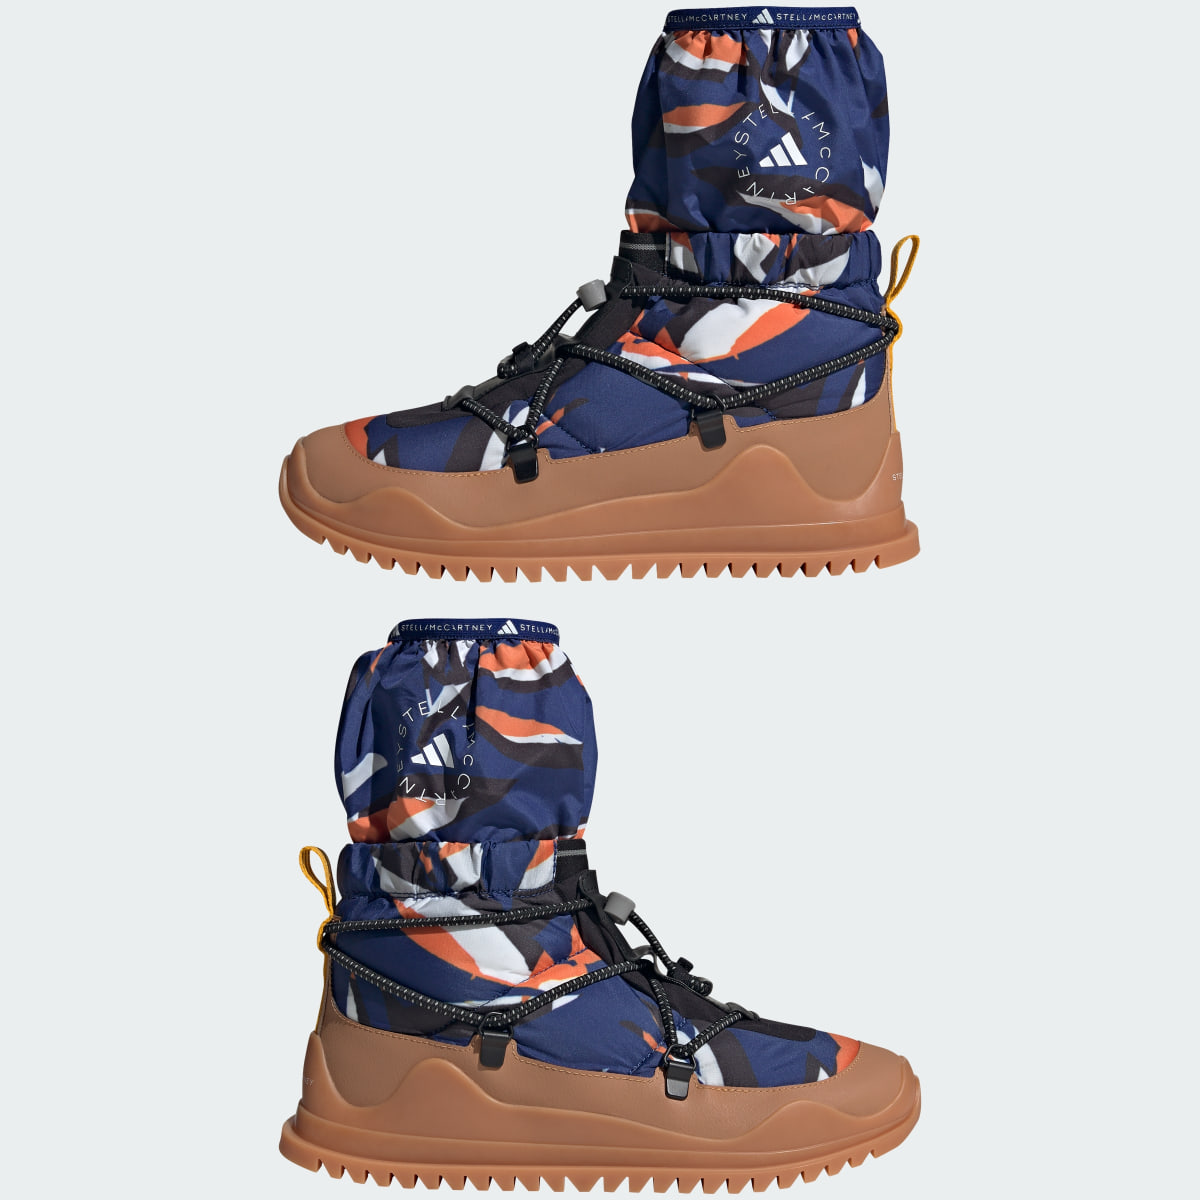 Adidas by Stella McCartney Winter Boots. 8